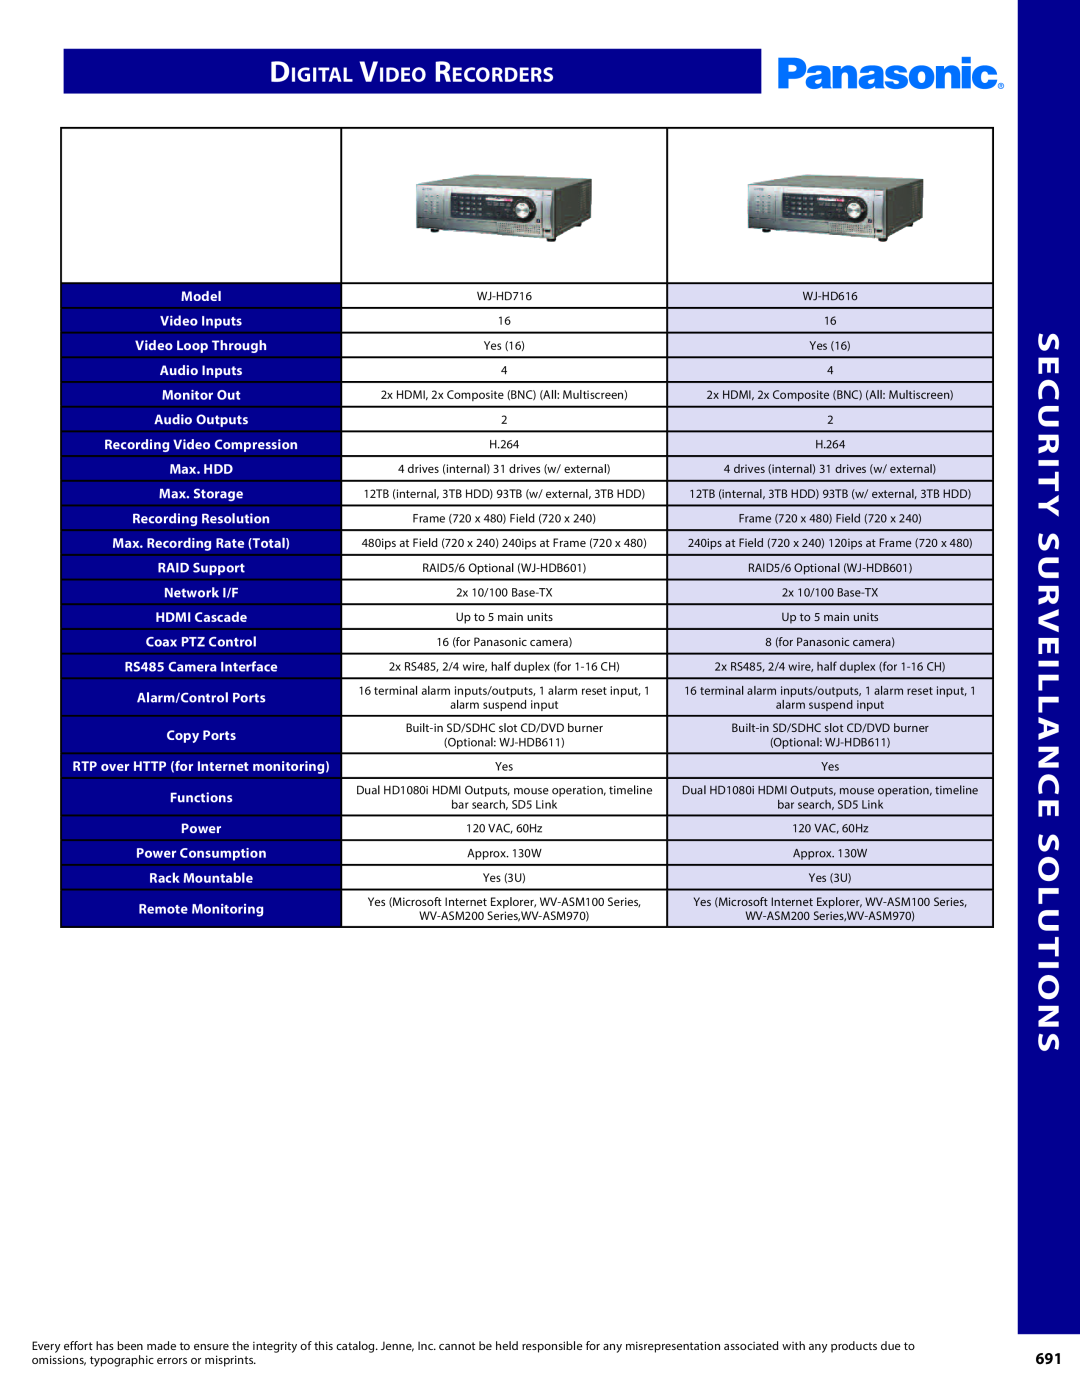 Panasonic PMPU2000 manual Digital Video Recorders, Security Surveillance Solutions 